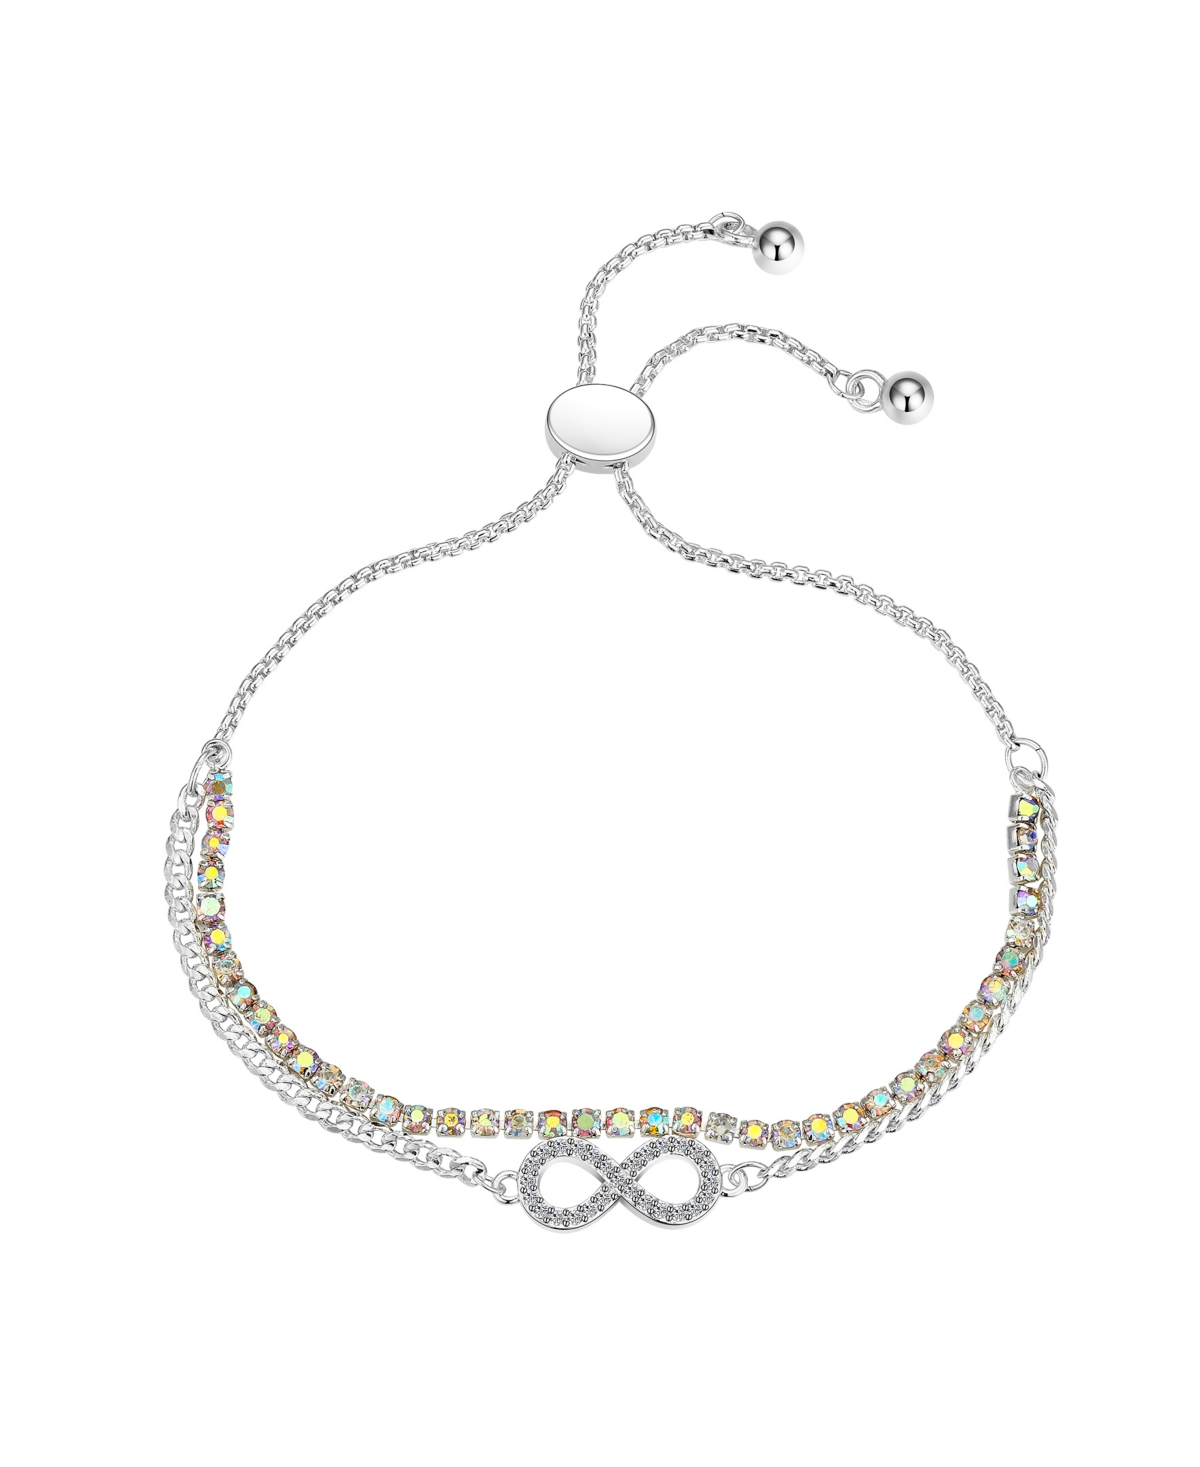 Aurora Borealis Crystal Infinity Double Strand Bolo Bracelet - Silver